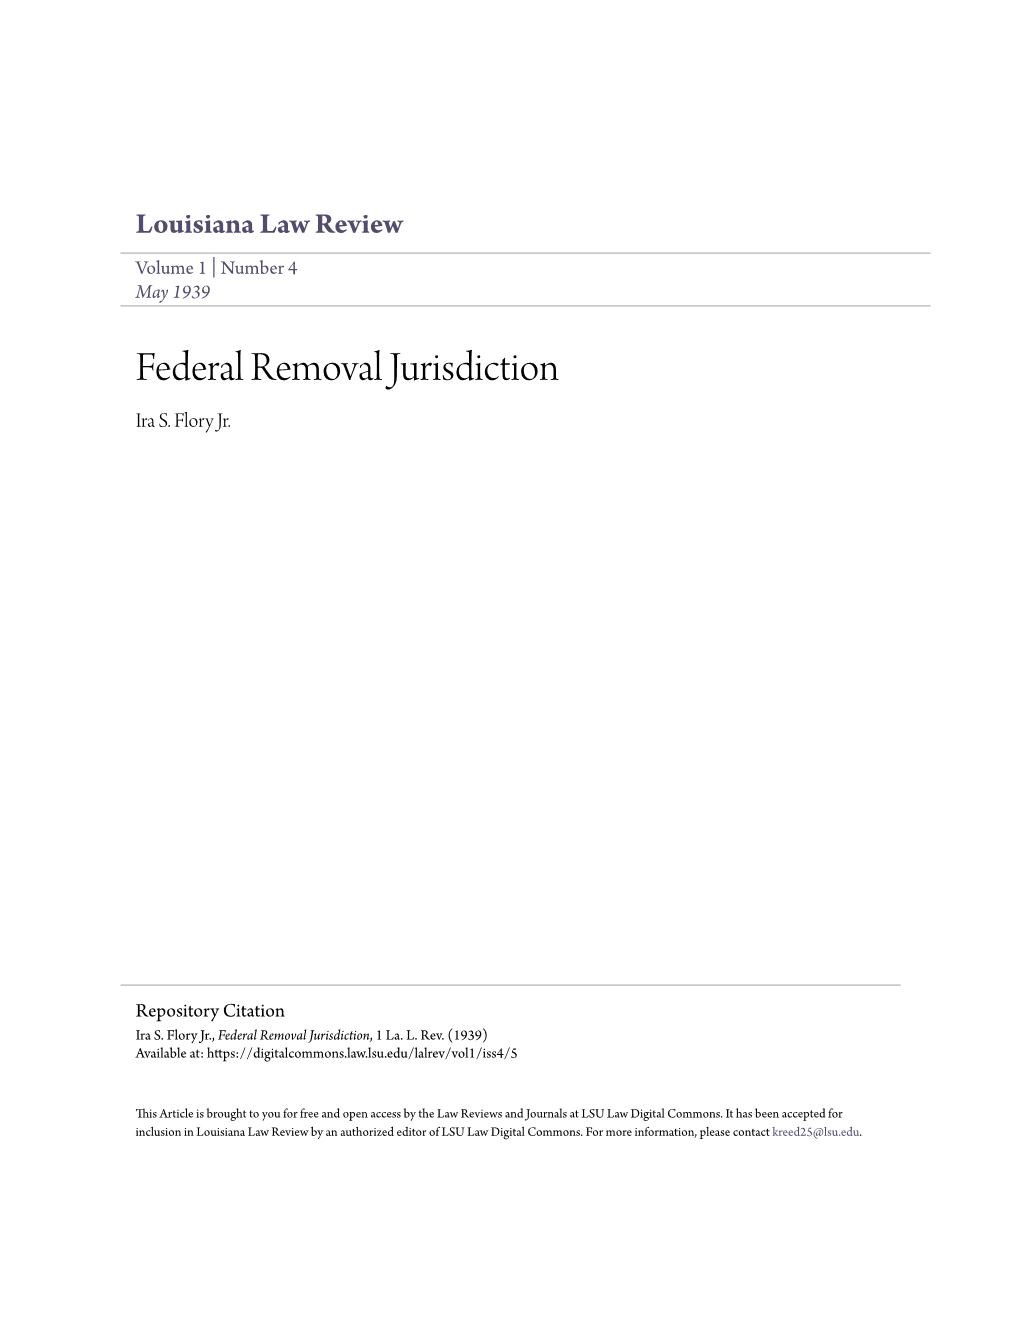 Federal Removal Jurisdiction Ira S